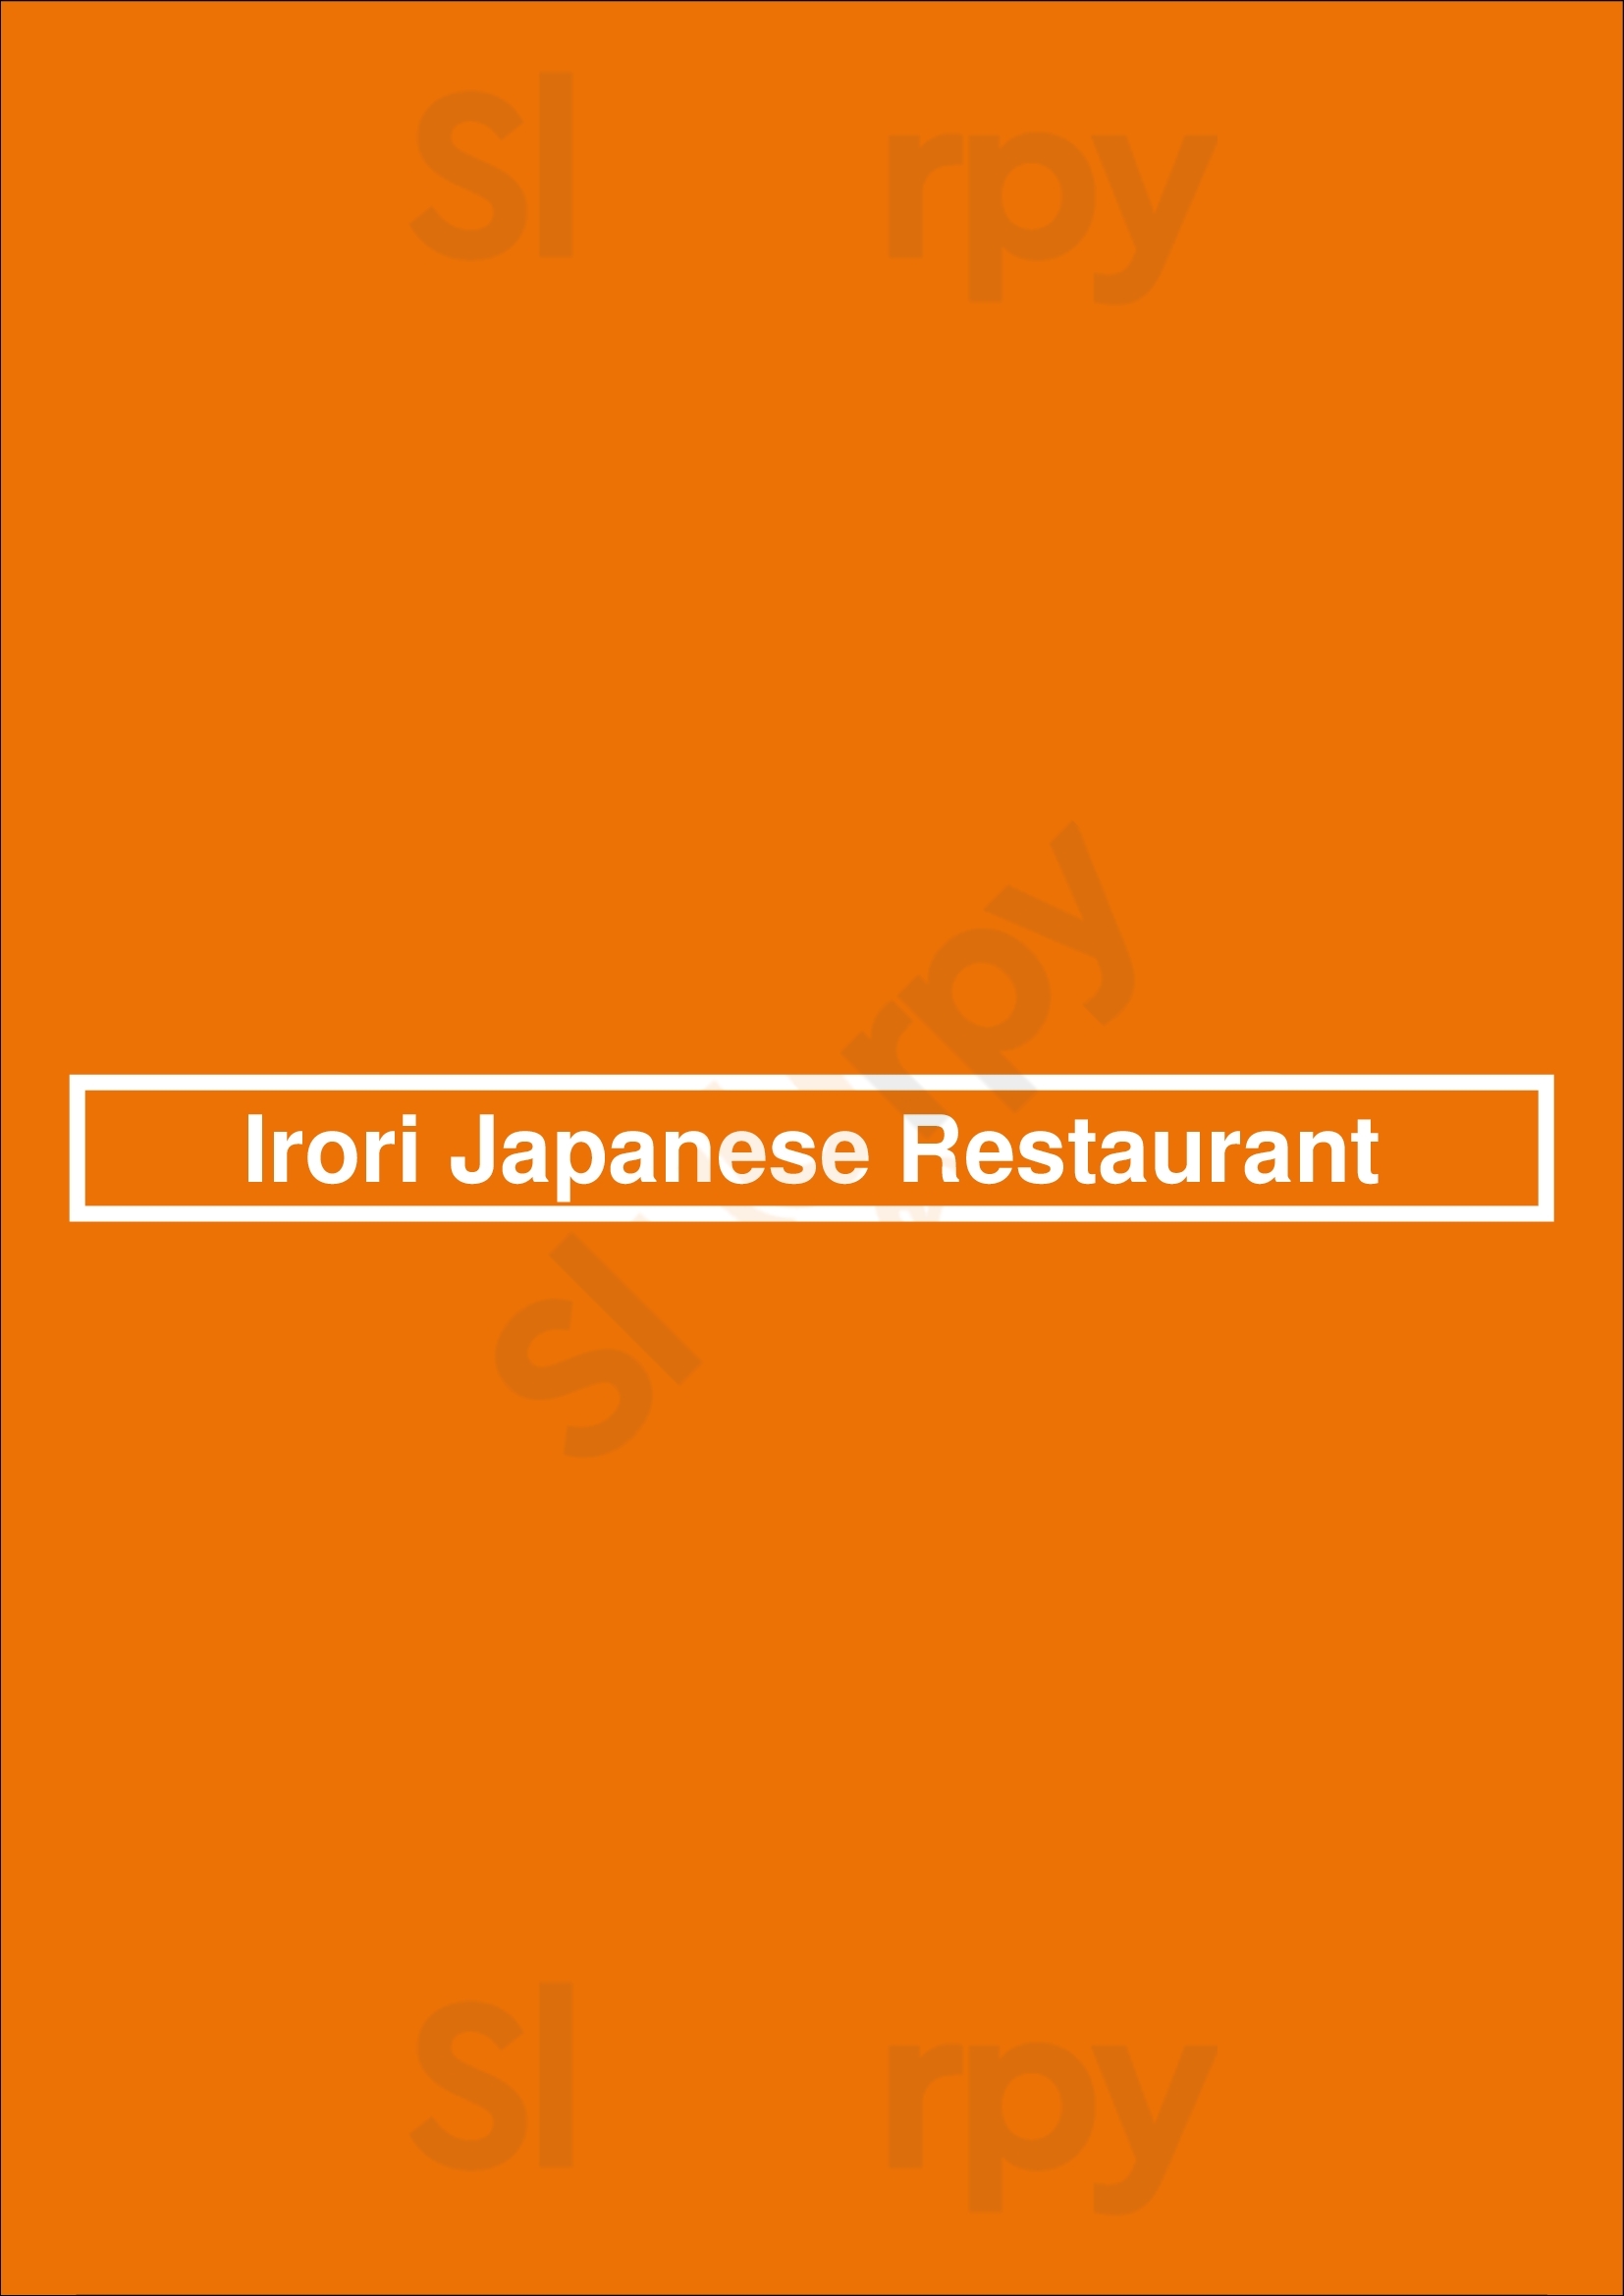 Irori Japanese Restaurant Marina del Rey Menu - 1